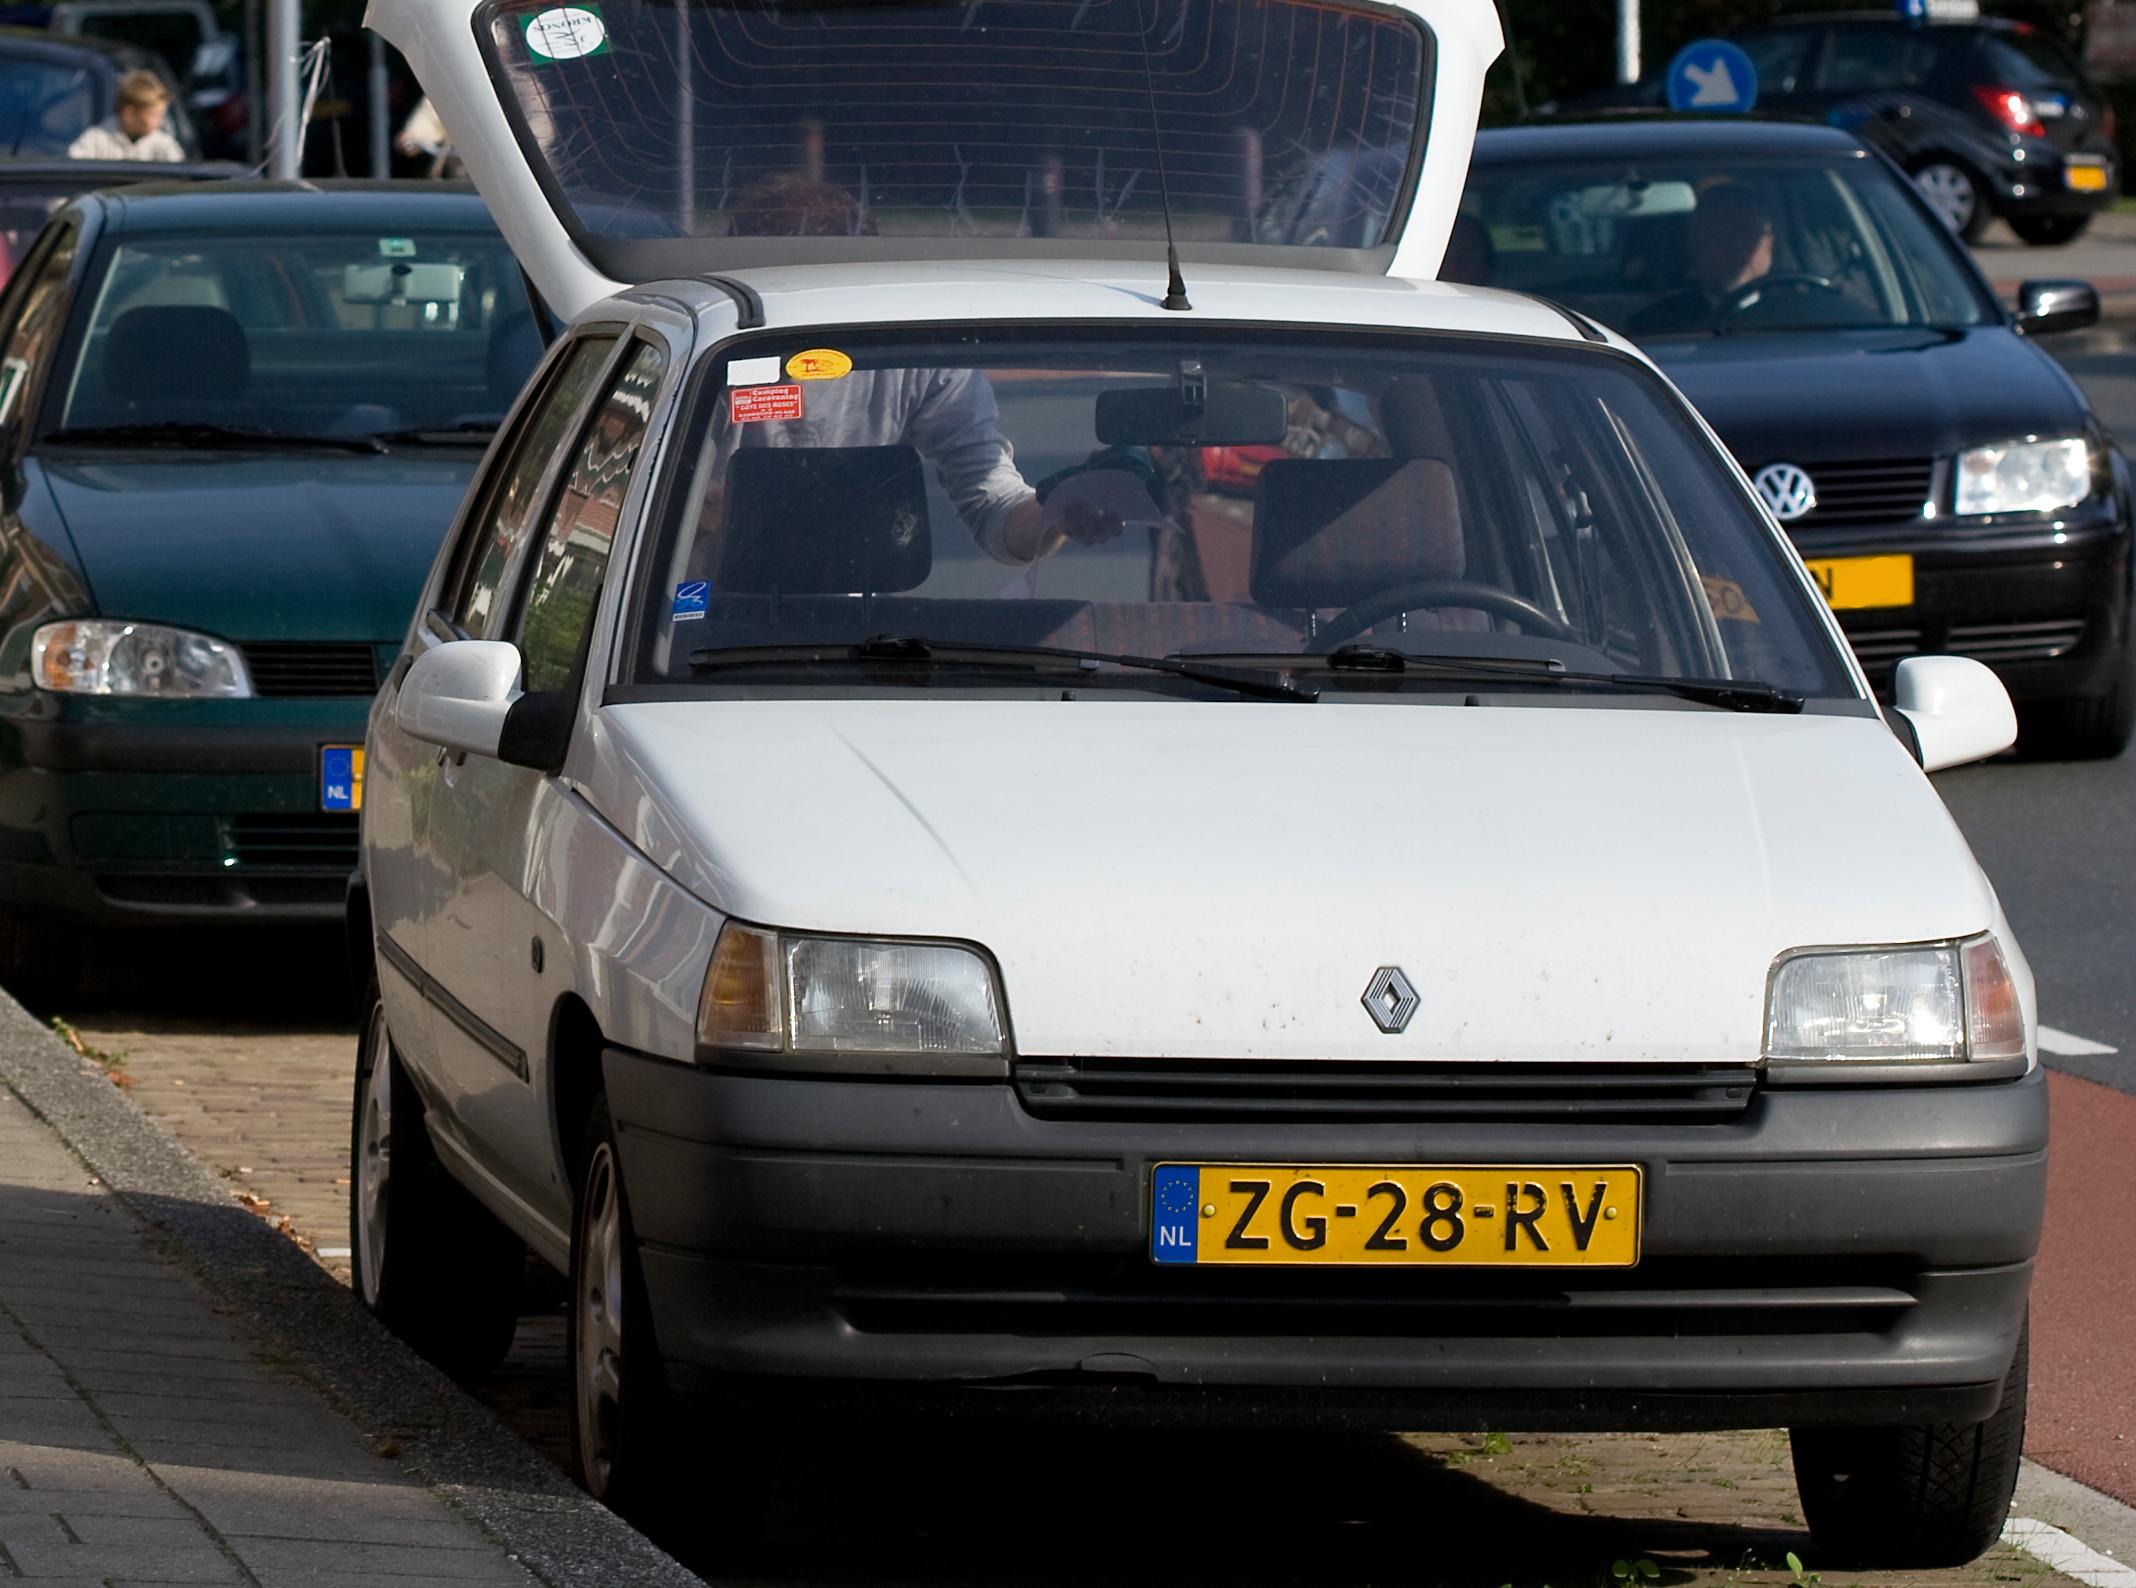 File:Renault Clio III 20090527 rear.JPG - Wikipedia